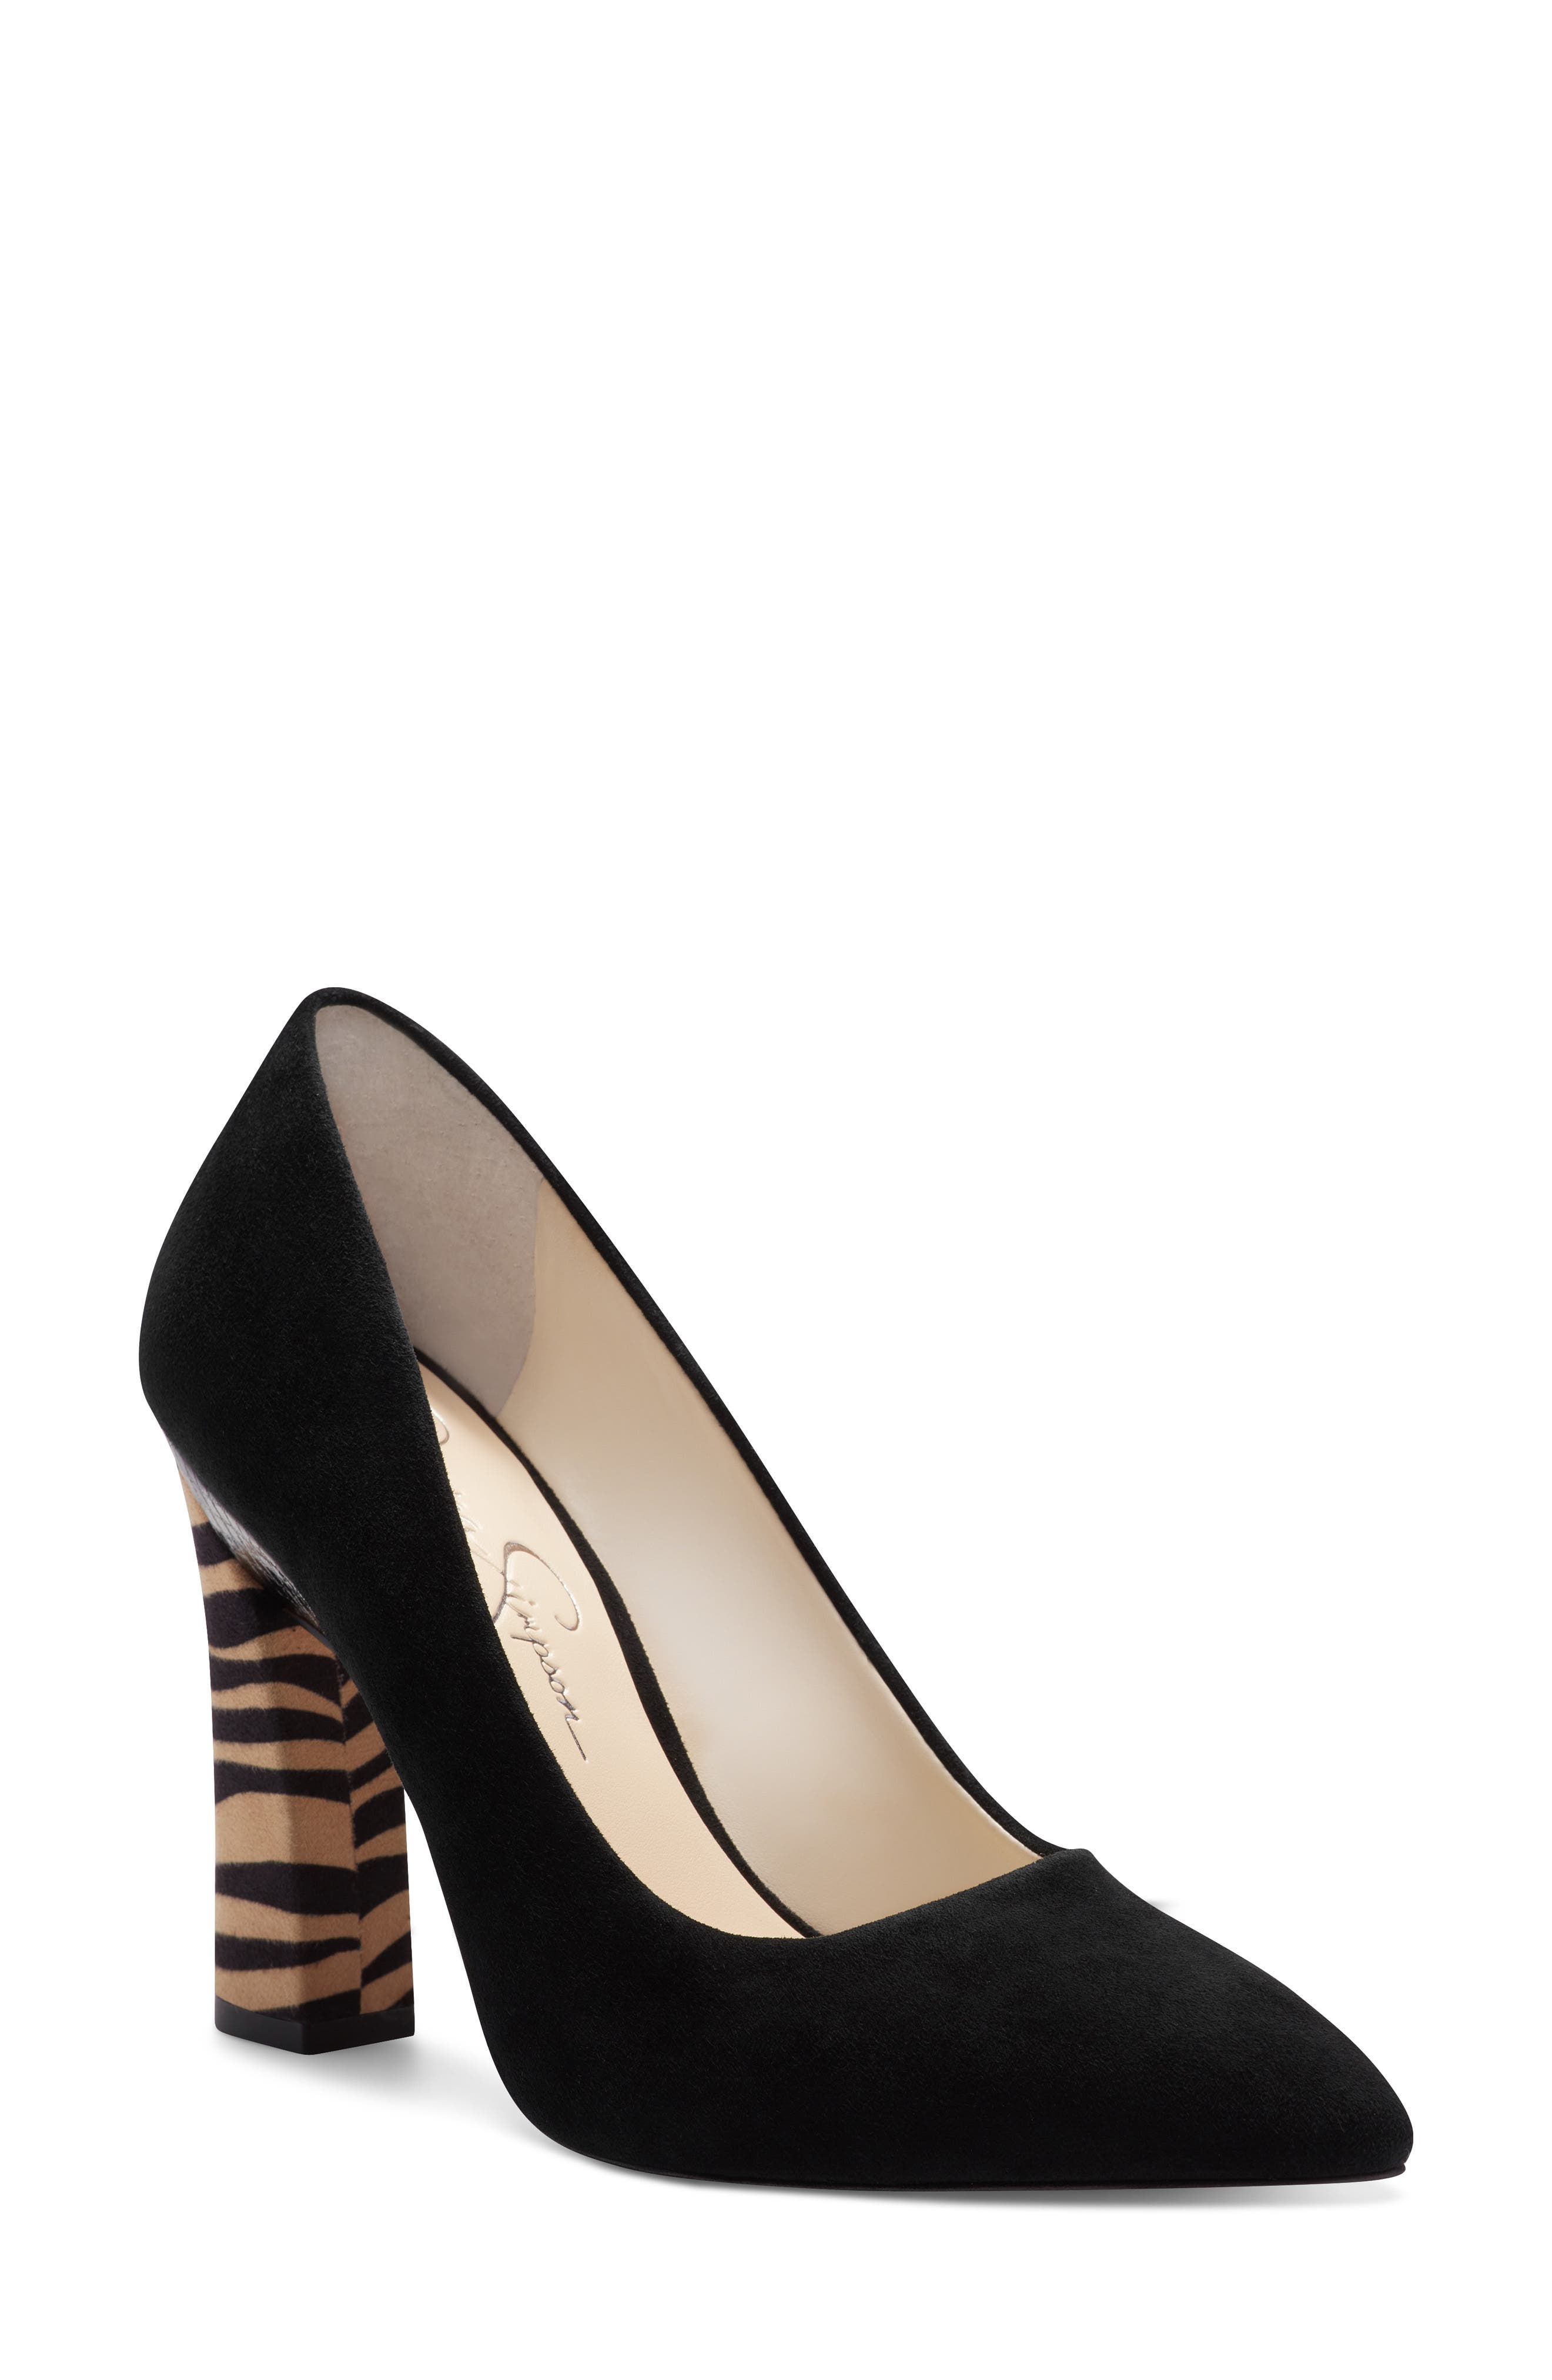 jessica simpson heels pumps